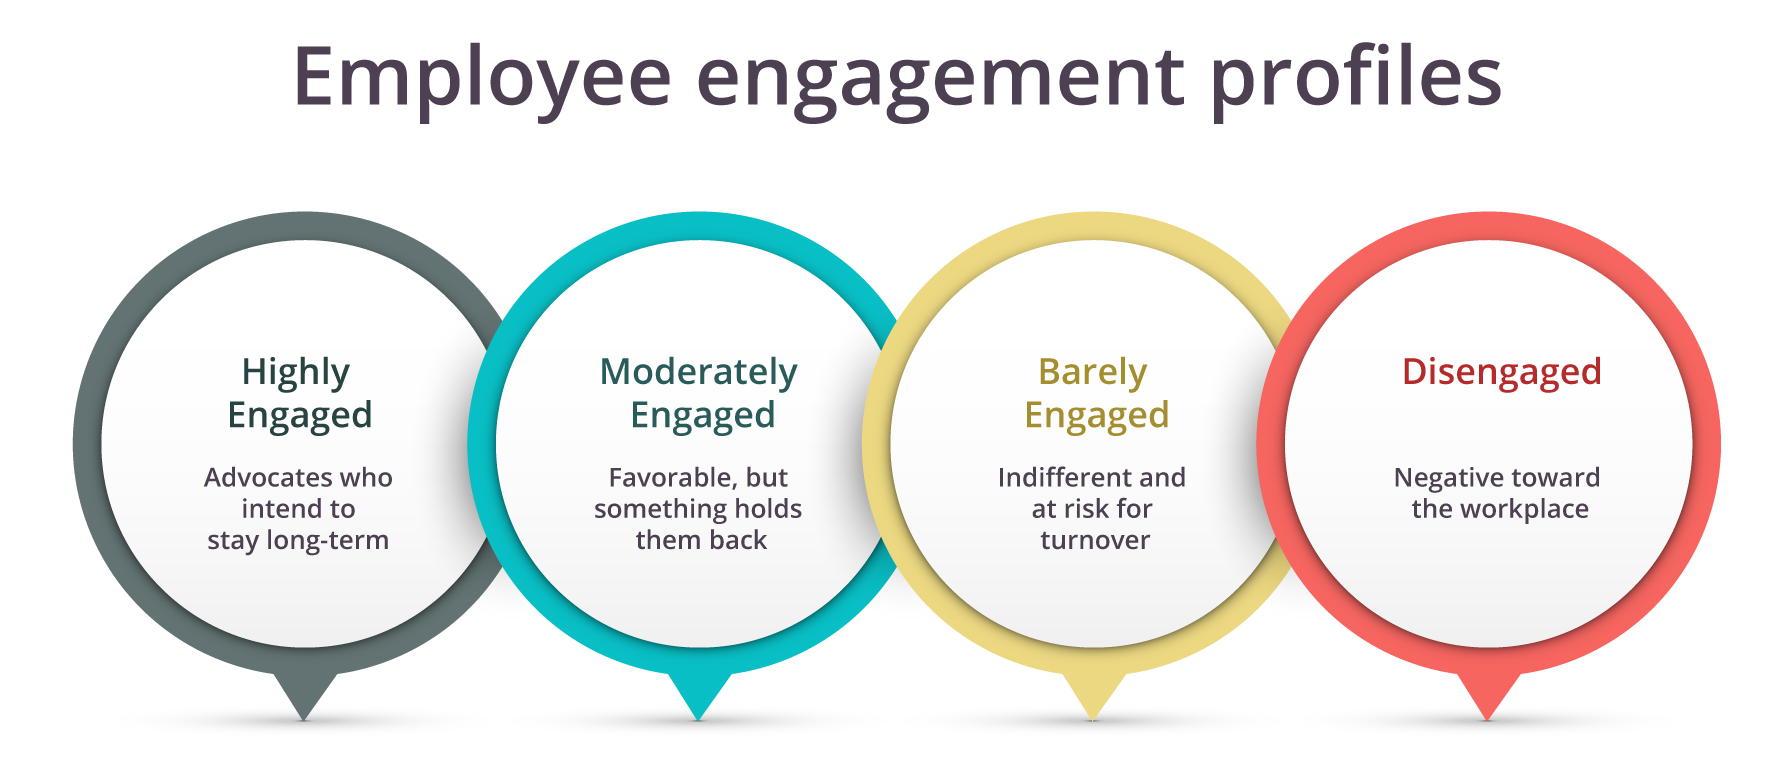 Employee engagement profiles